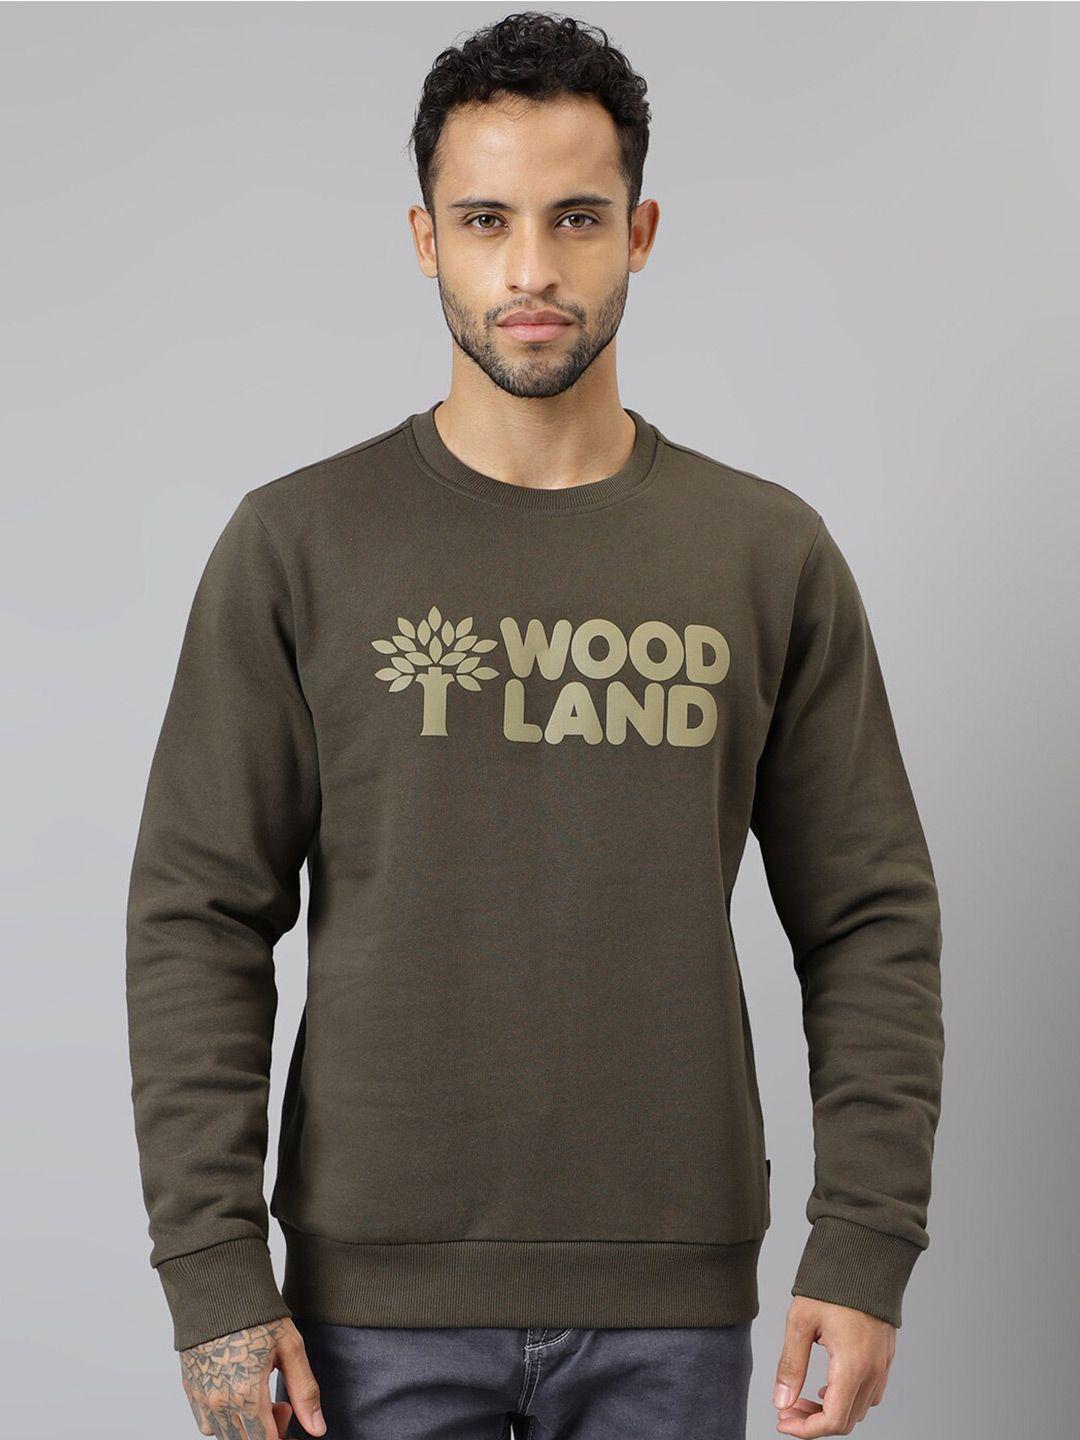 woodland-typography-printed-pure-cotton-pullover-sweatshirt